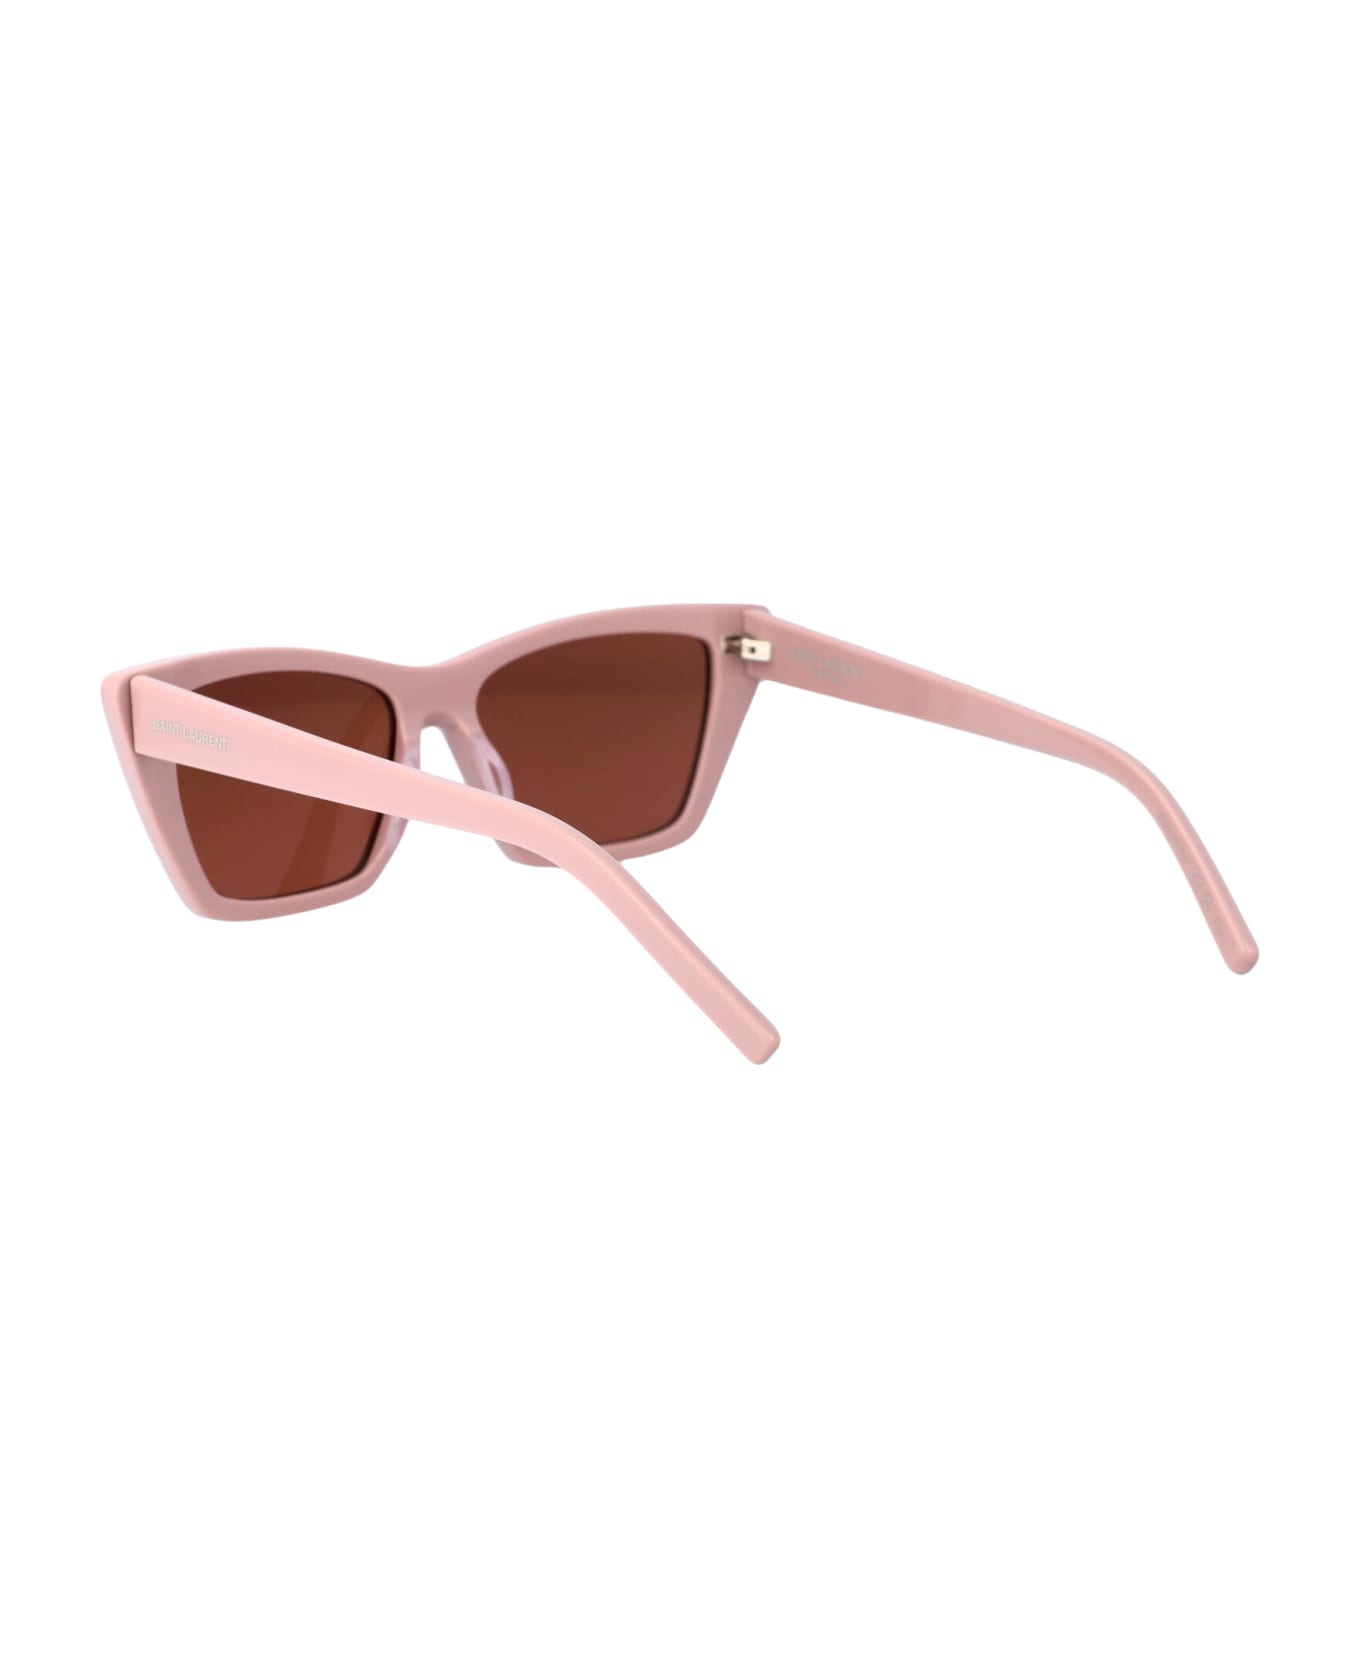 Saint Laurent Eyewear Sl 276 Mica Sunglasses - 058 PINK PINK BROWN